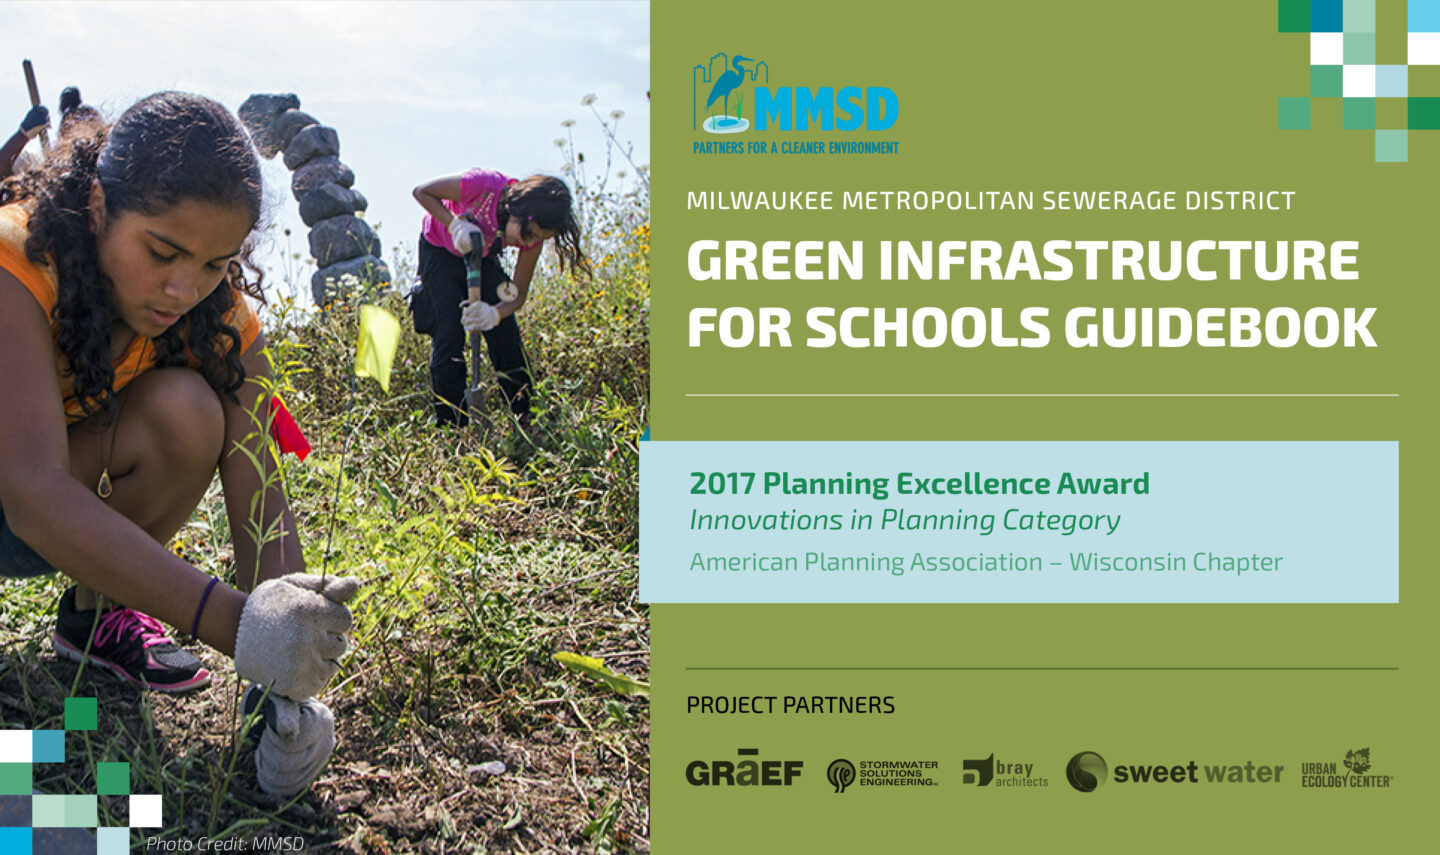 Green Infrastructure for Schools Guidebook Wins Award